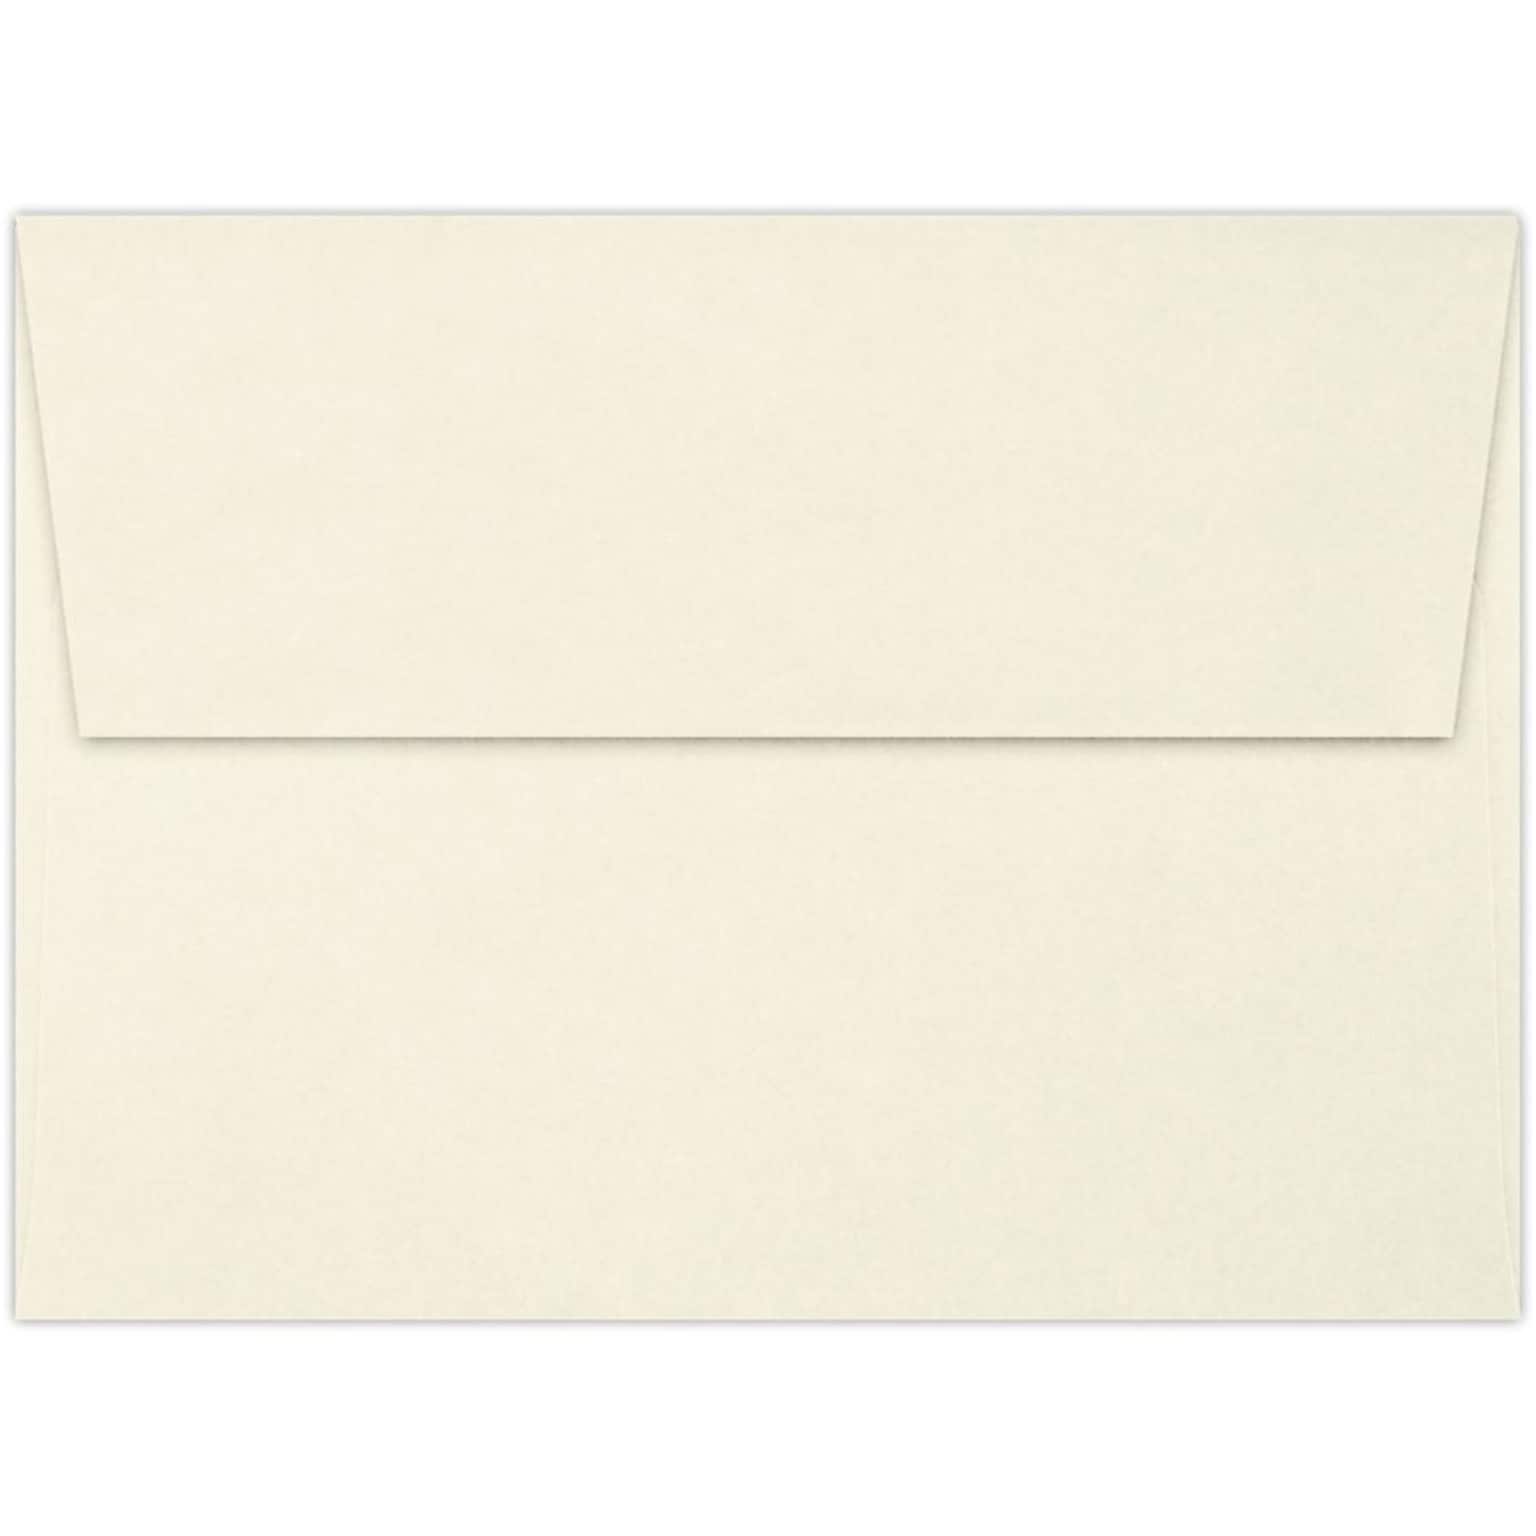 LUX A6 Invitation Envelopes (4 3/4 x 6 1/2) 50/Pack, 70lb. Classic Linen® Natural White (4875-70NWLI-50)